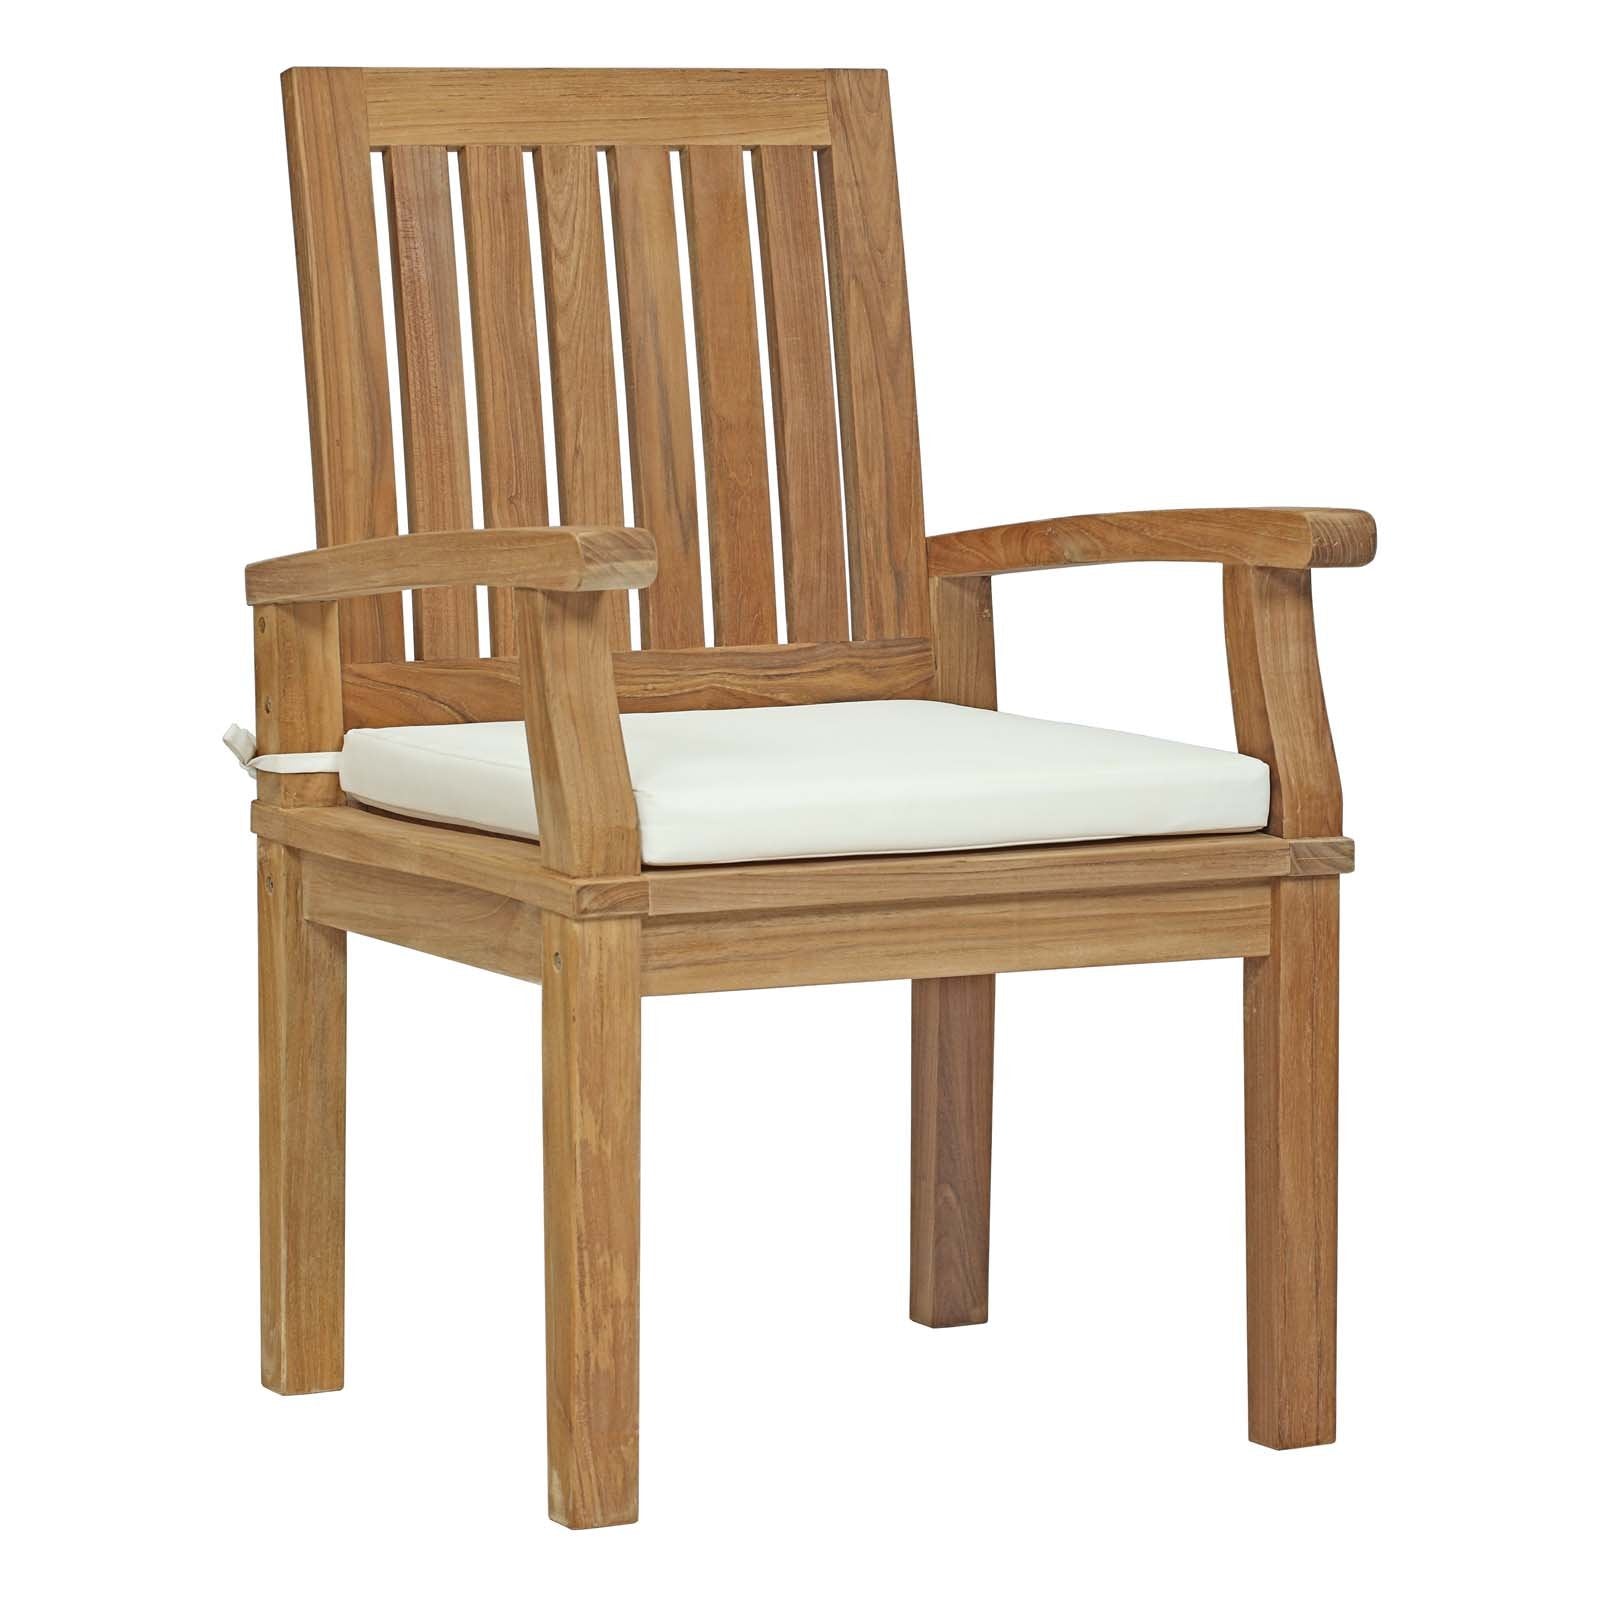 Macayla Outdoor Patio Teak Dining Chair - living-essentials